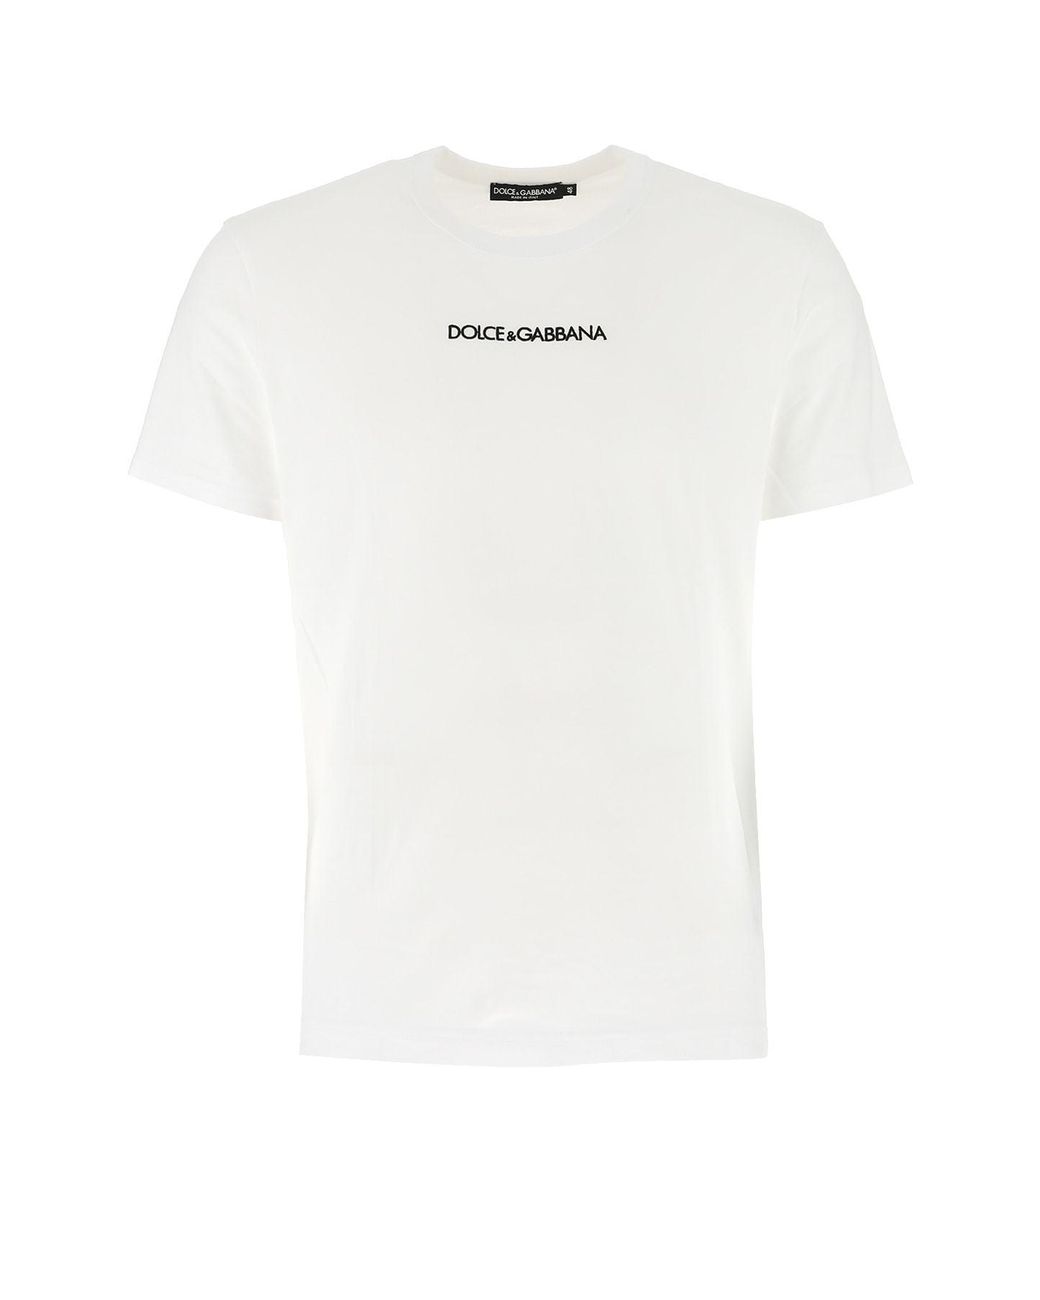 Dolce & Gabbana Cotton Logo T-shirt in White for Men - Lyst